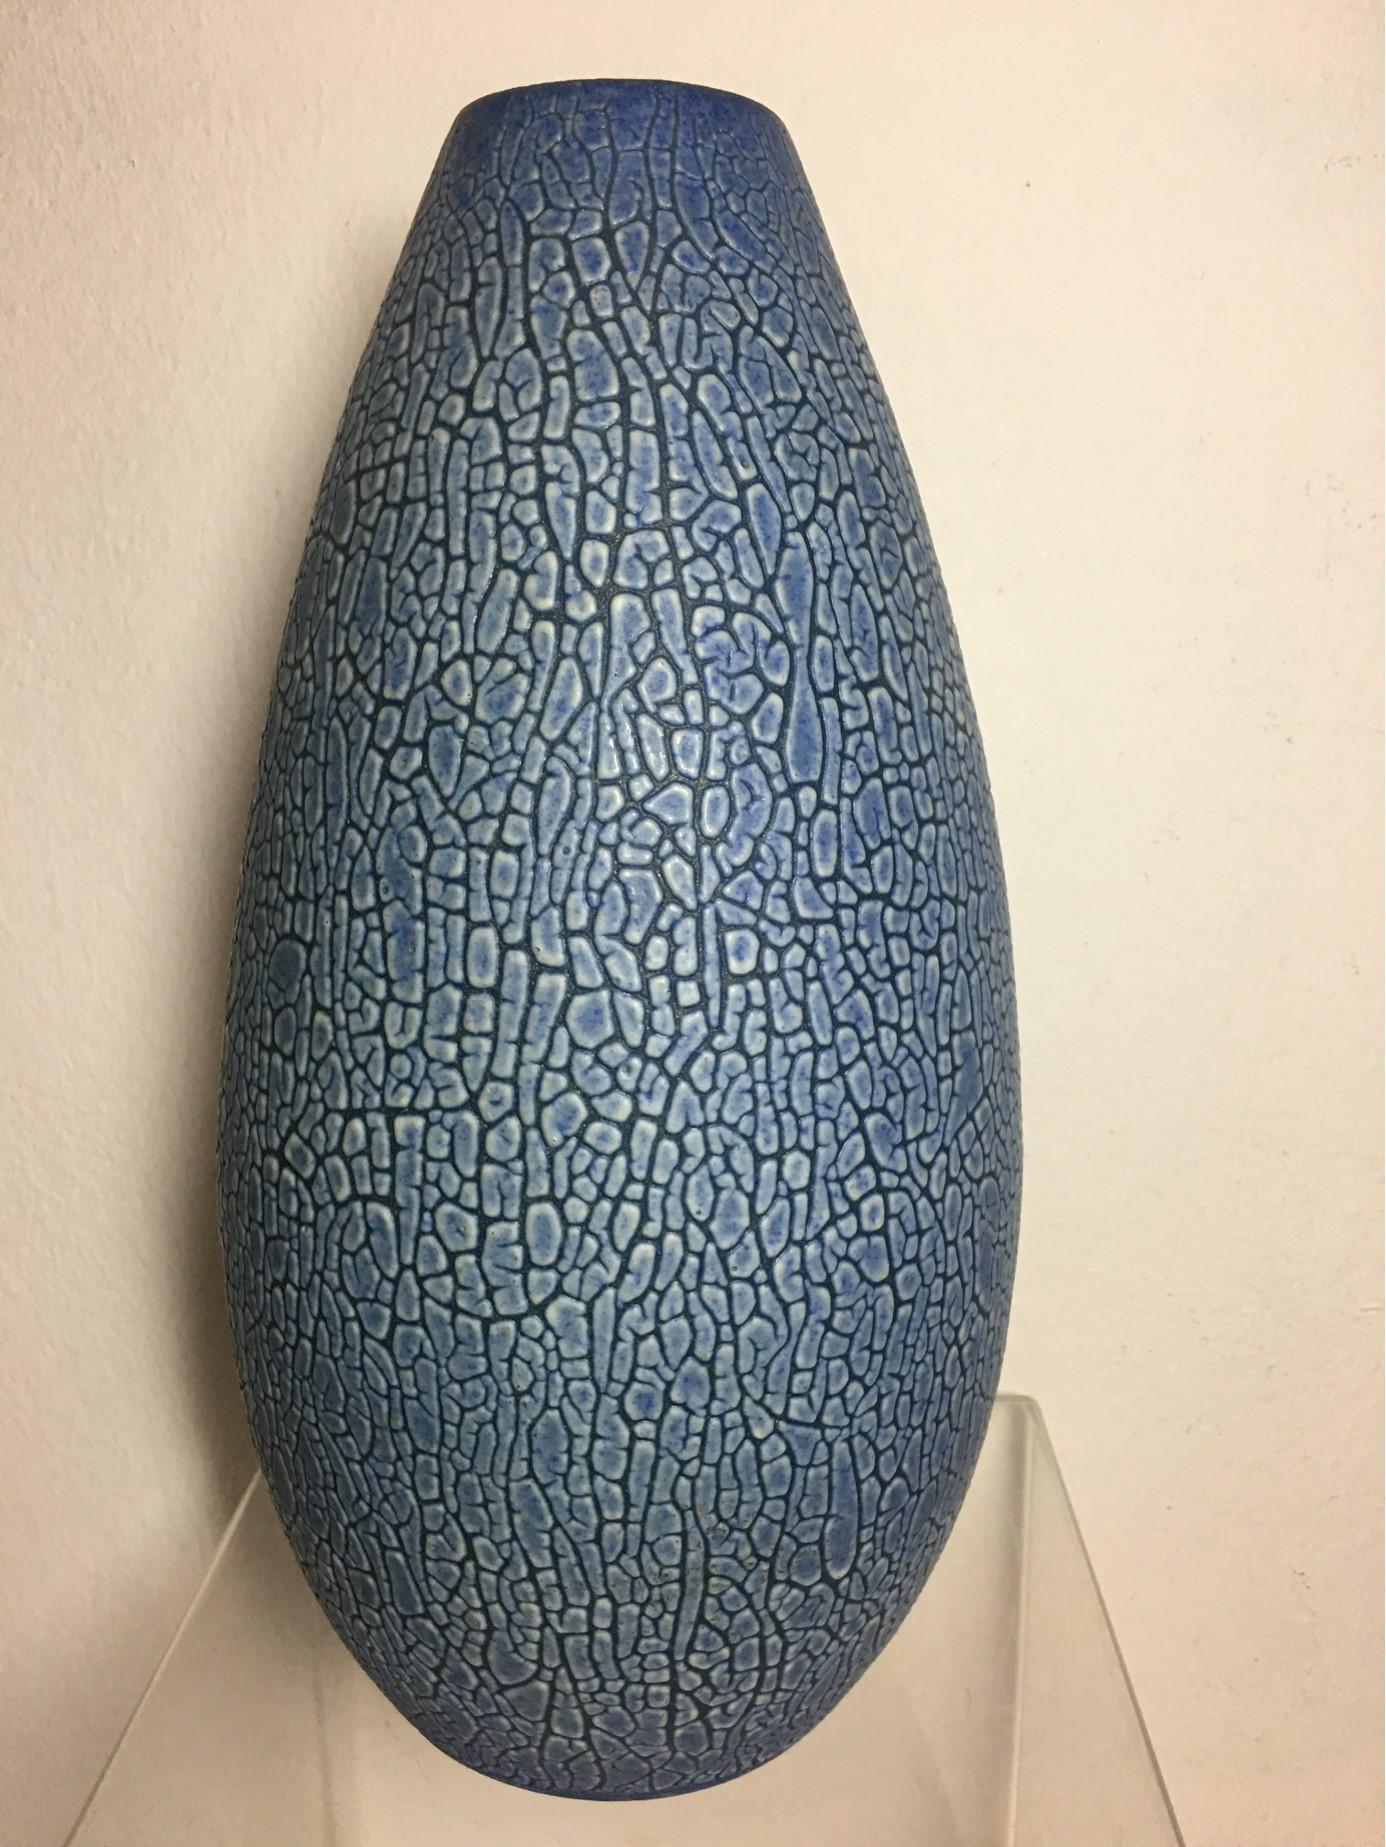 Reptile Skin Look Ceramic Vase from 1950s Germany For Sale 1